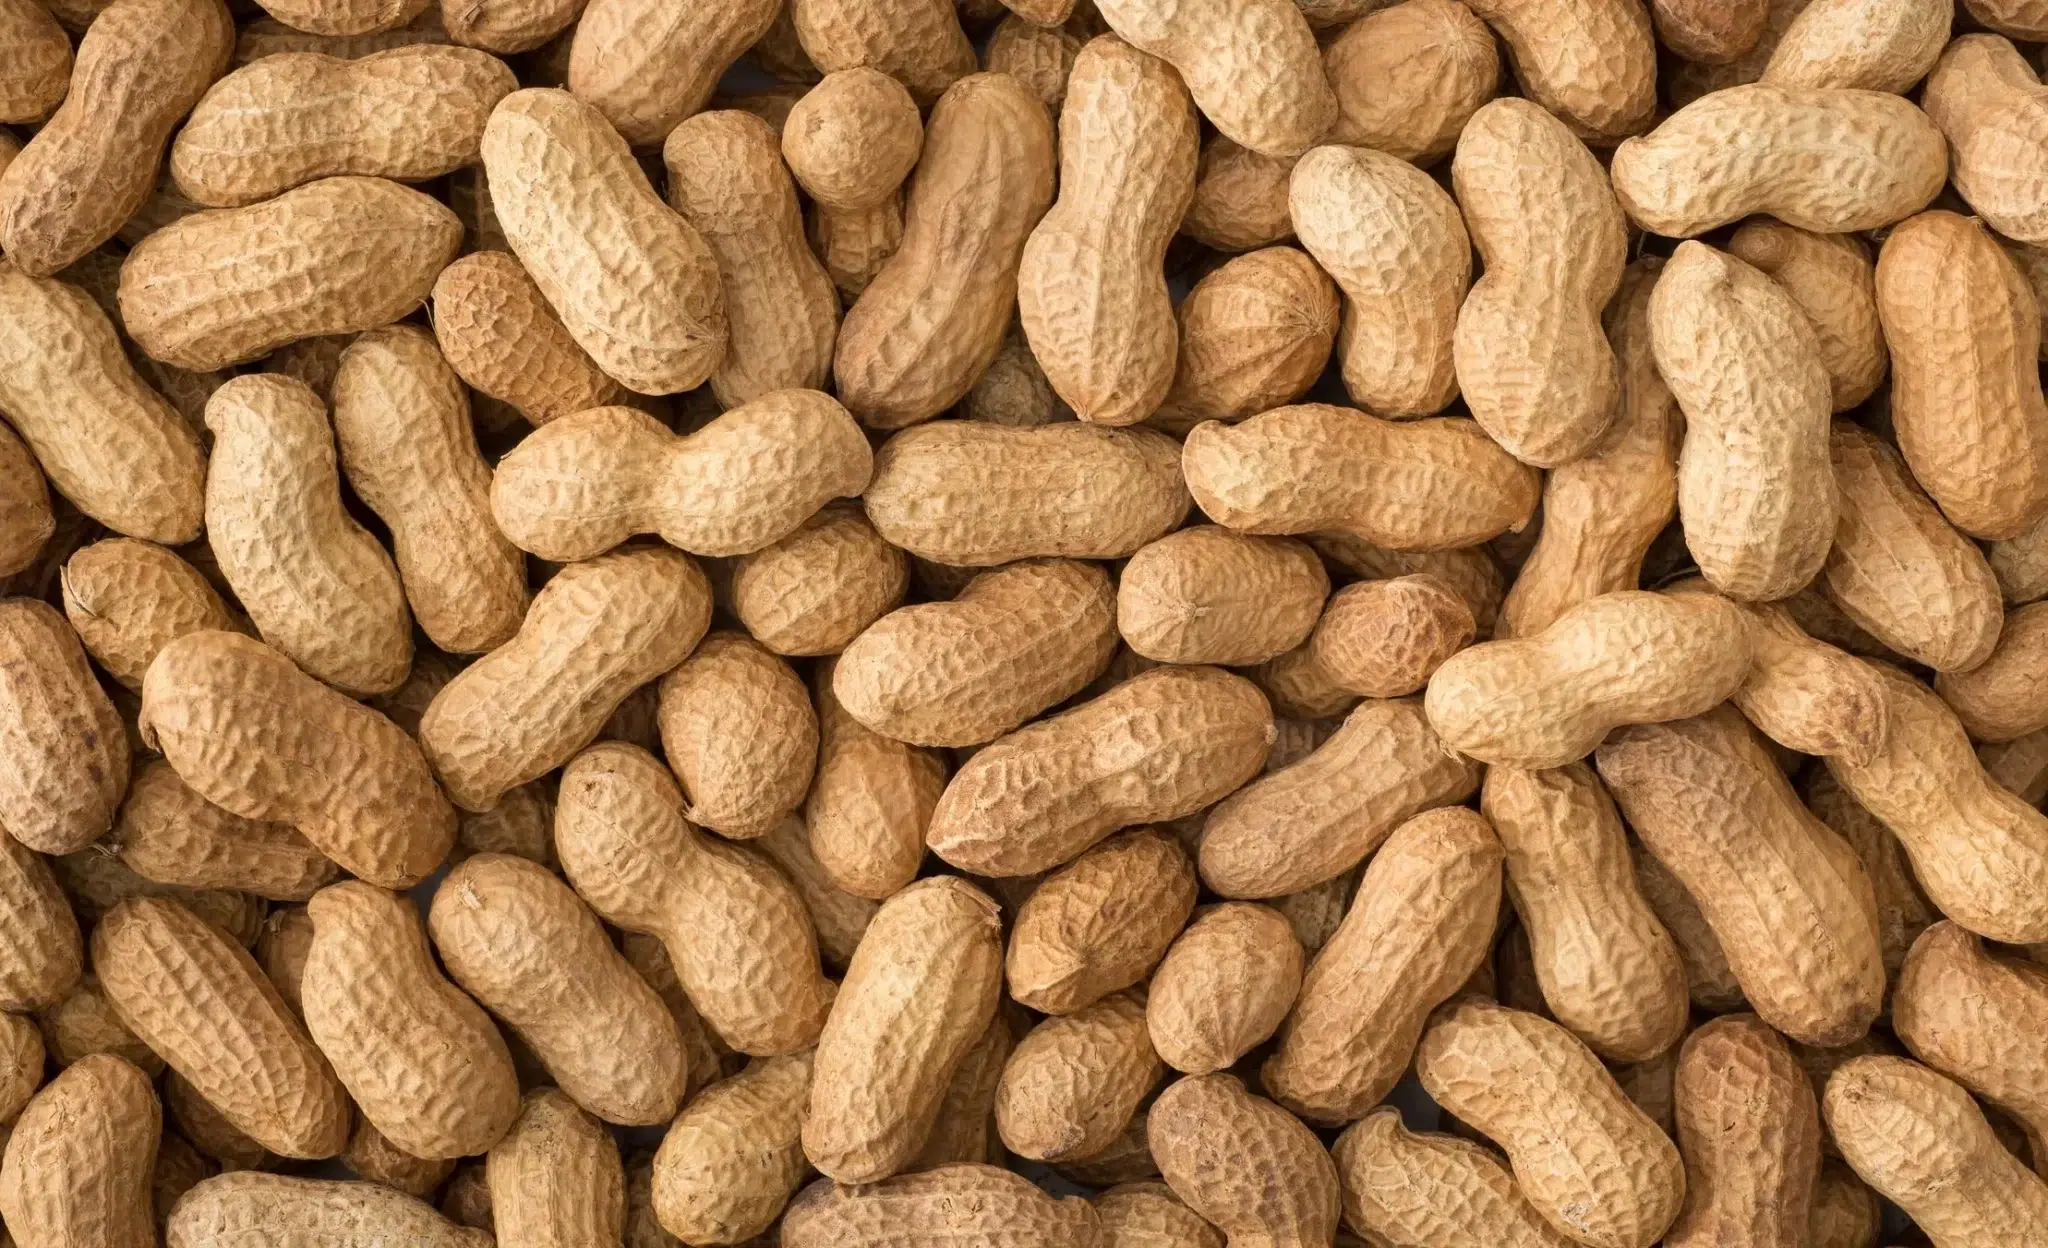 الفول السوداني (Peanuts)